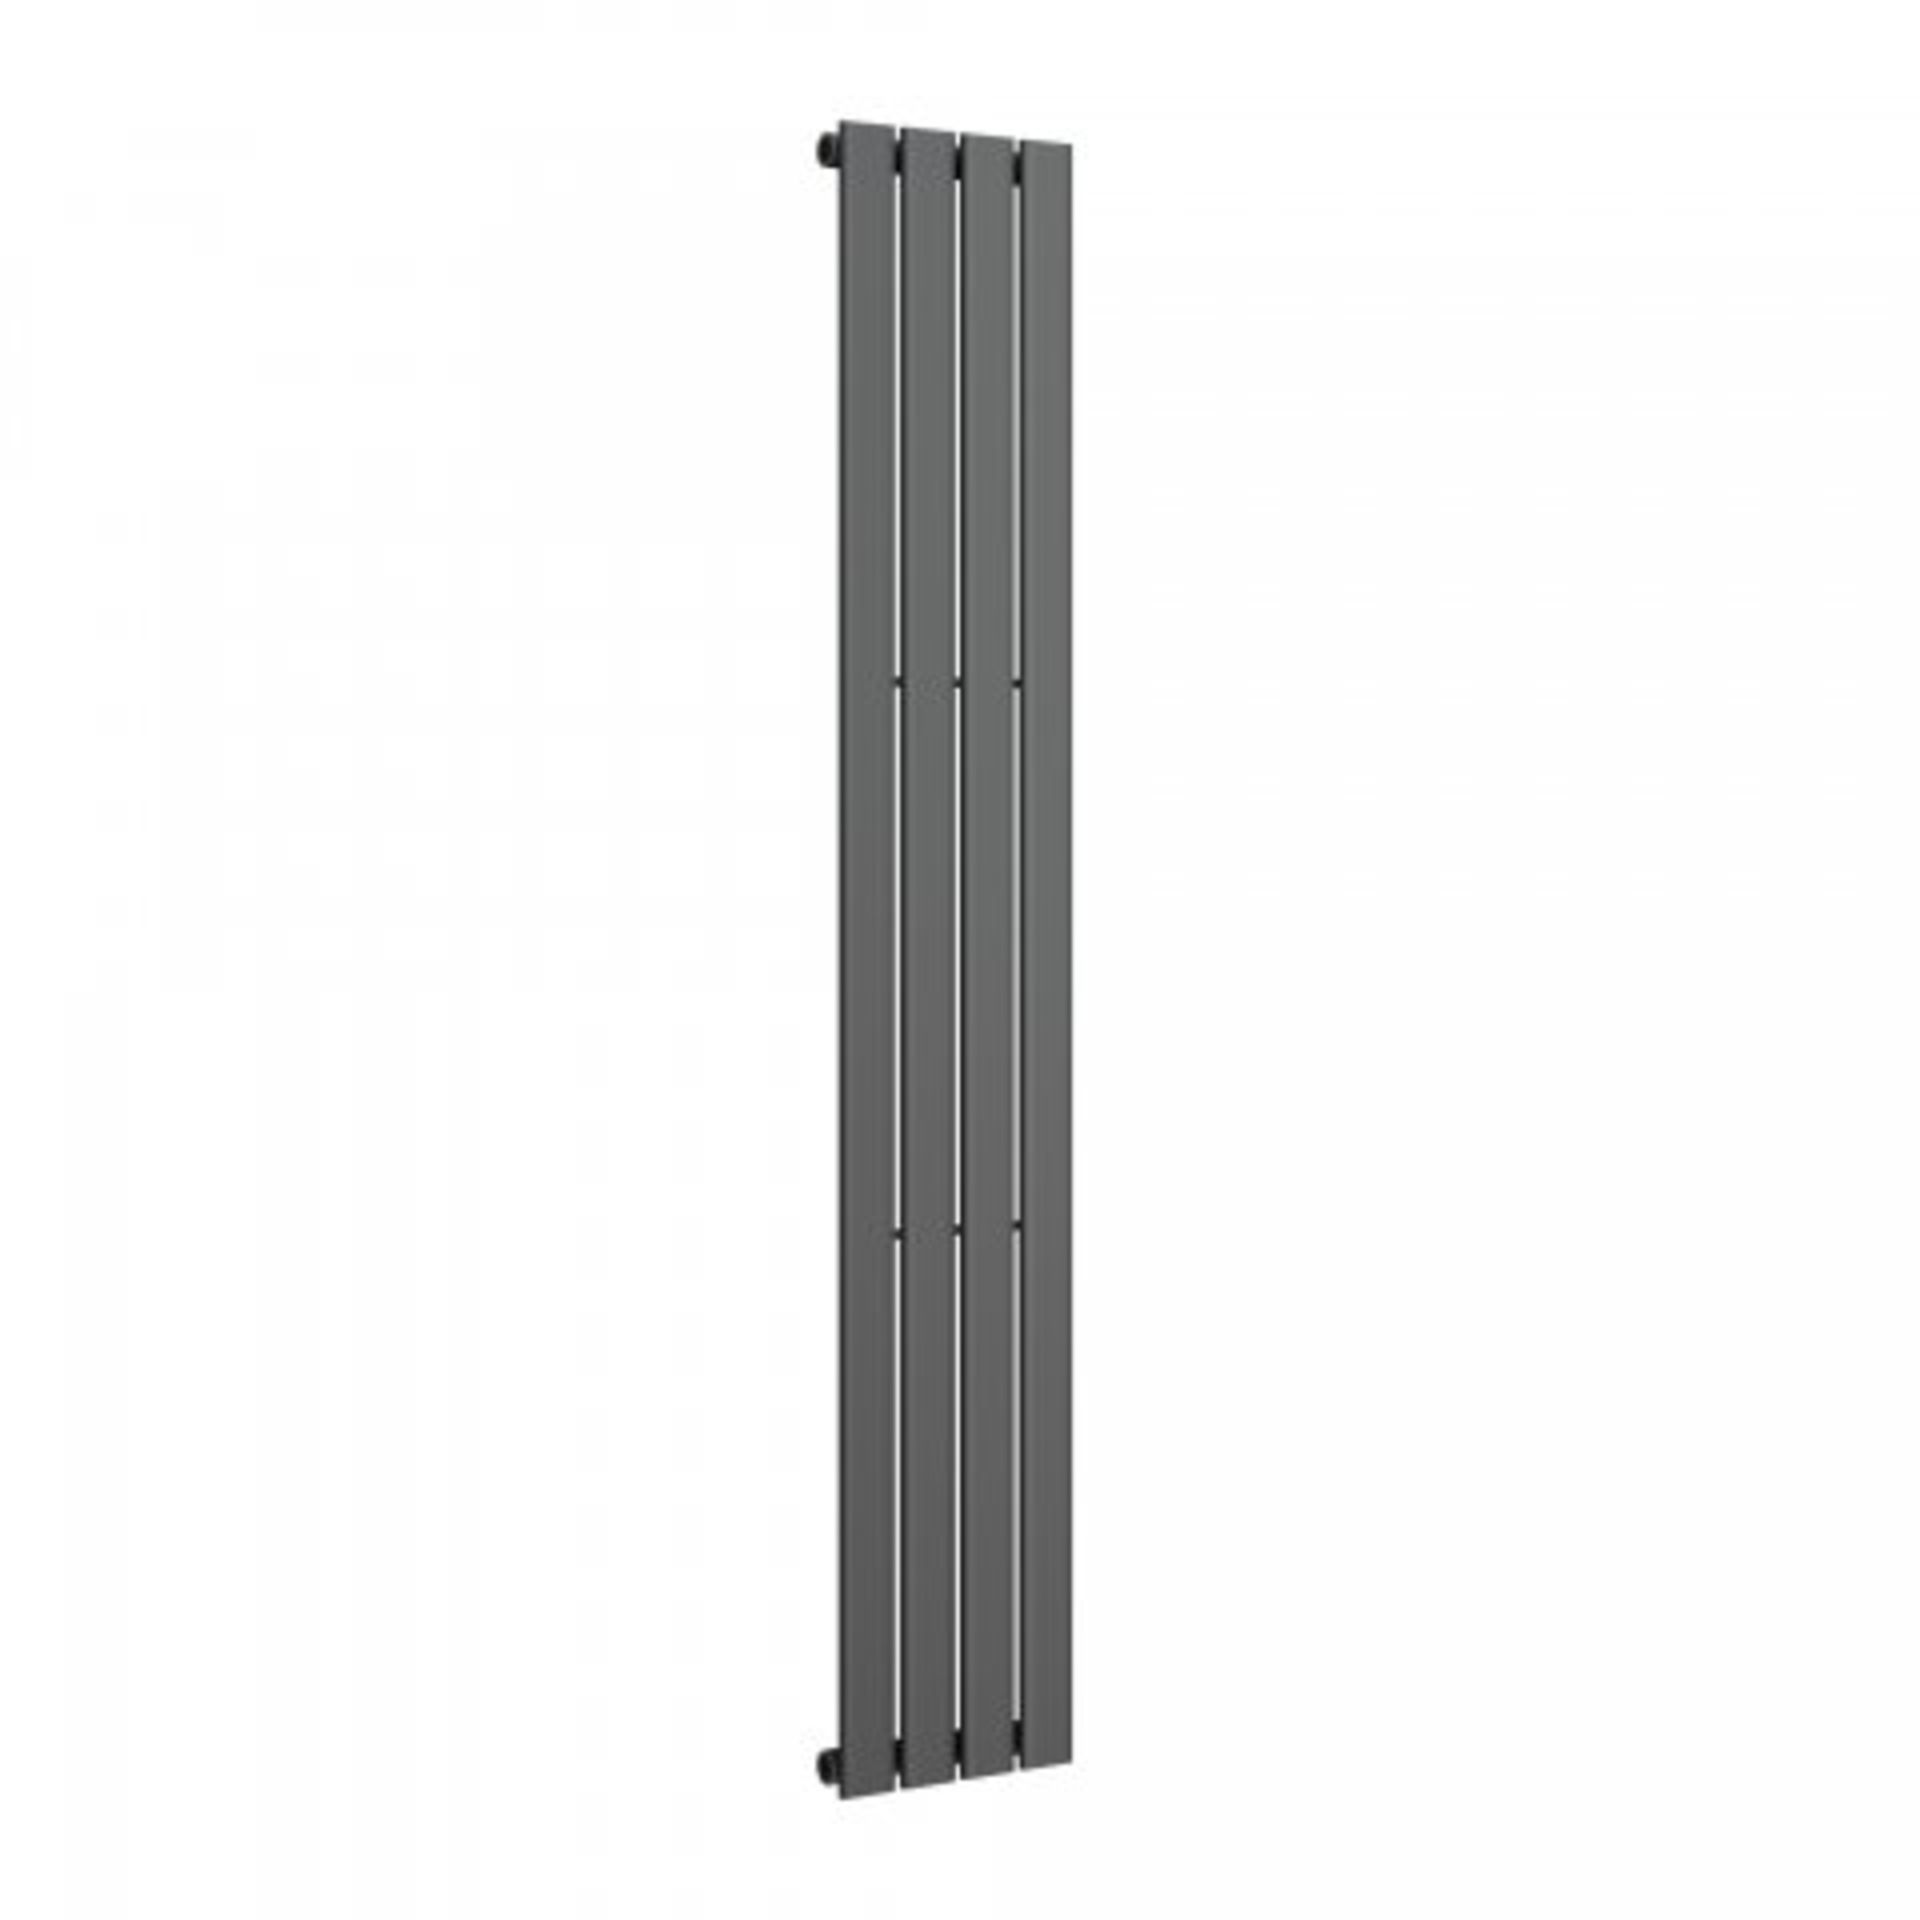 (O11) 1800x300mm Anthracite Single Flat Panel Vertical Radiator - Thera Range. RRP £299.99. Designer - Image 2 of 3